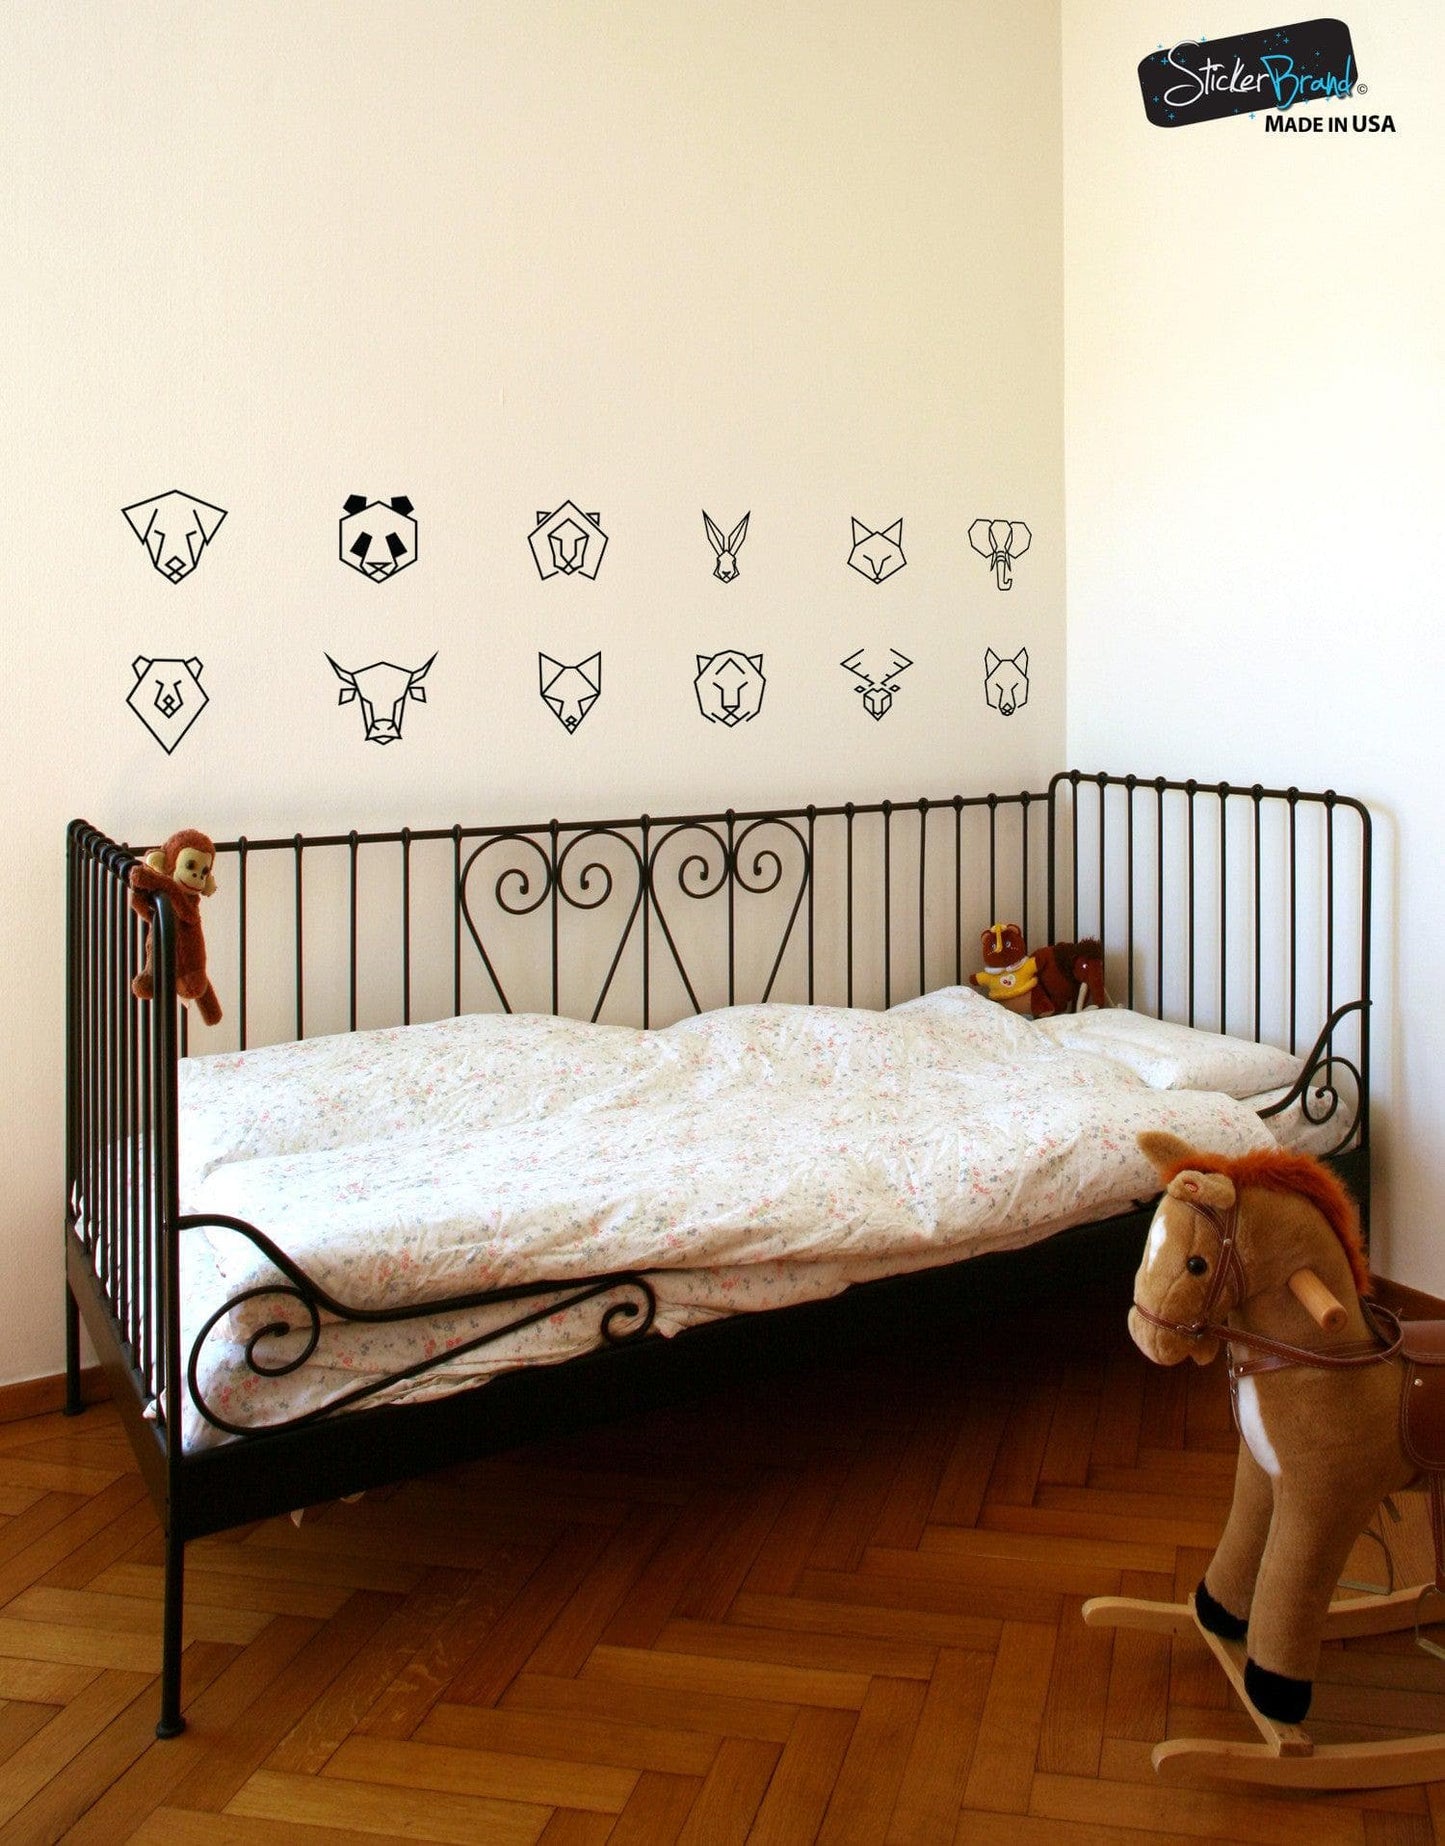 Bear, Bull, Fox, Tiger, Deer, Wolf, Dog, Panda, Lion, Rabbit, Cat and Elephant Geometric Animal Pattern Wall Decal #6091